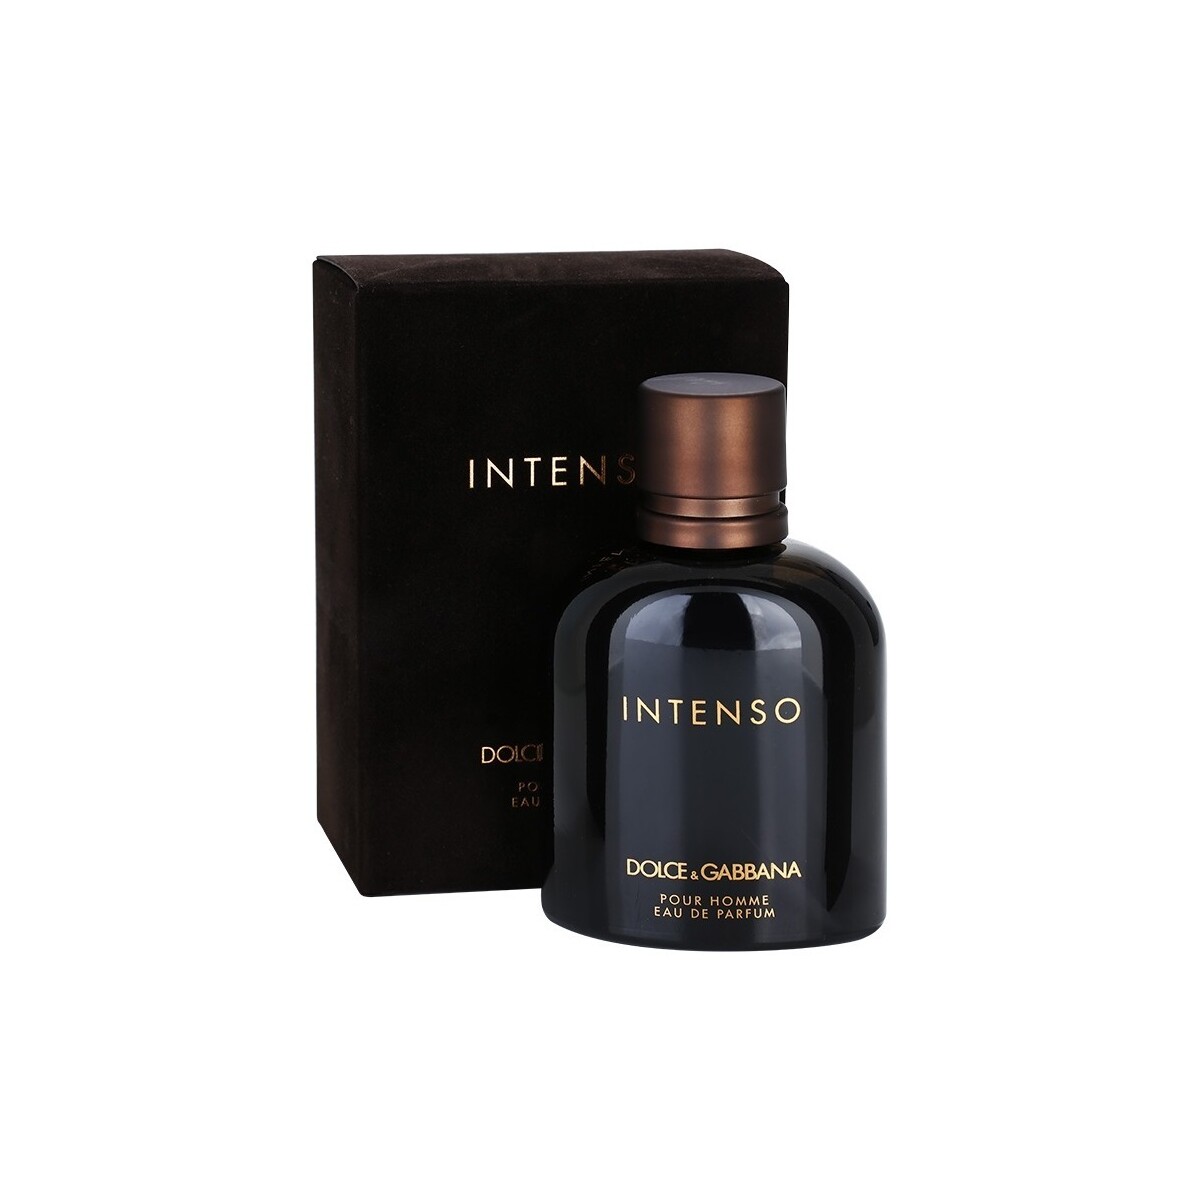 D&G Intenso - perfume - 200ml - spray Intenso - eau de 